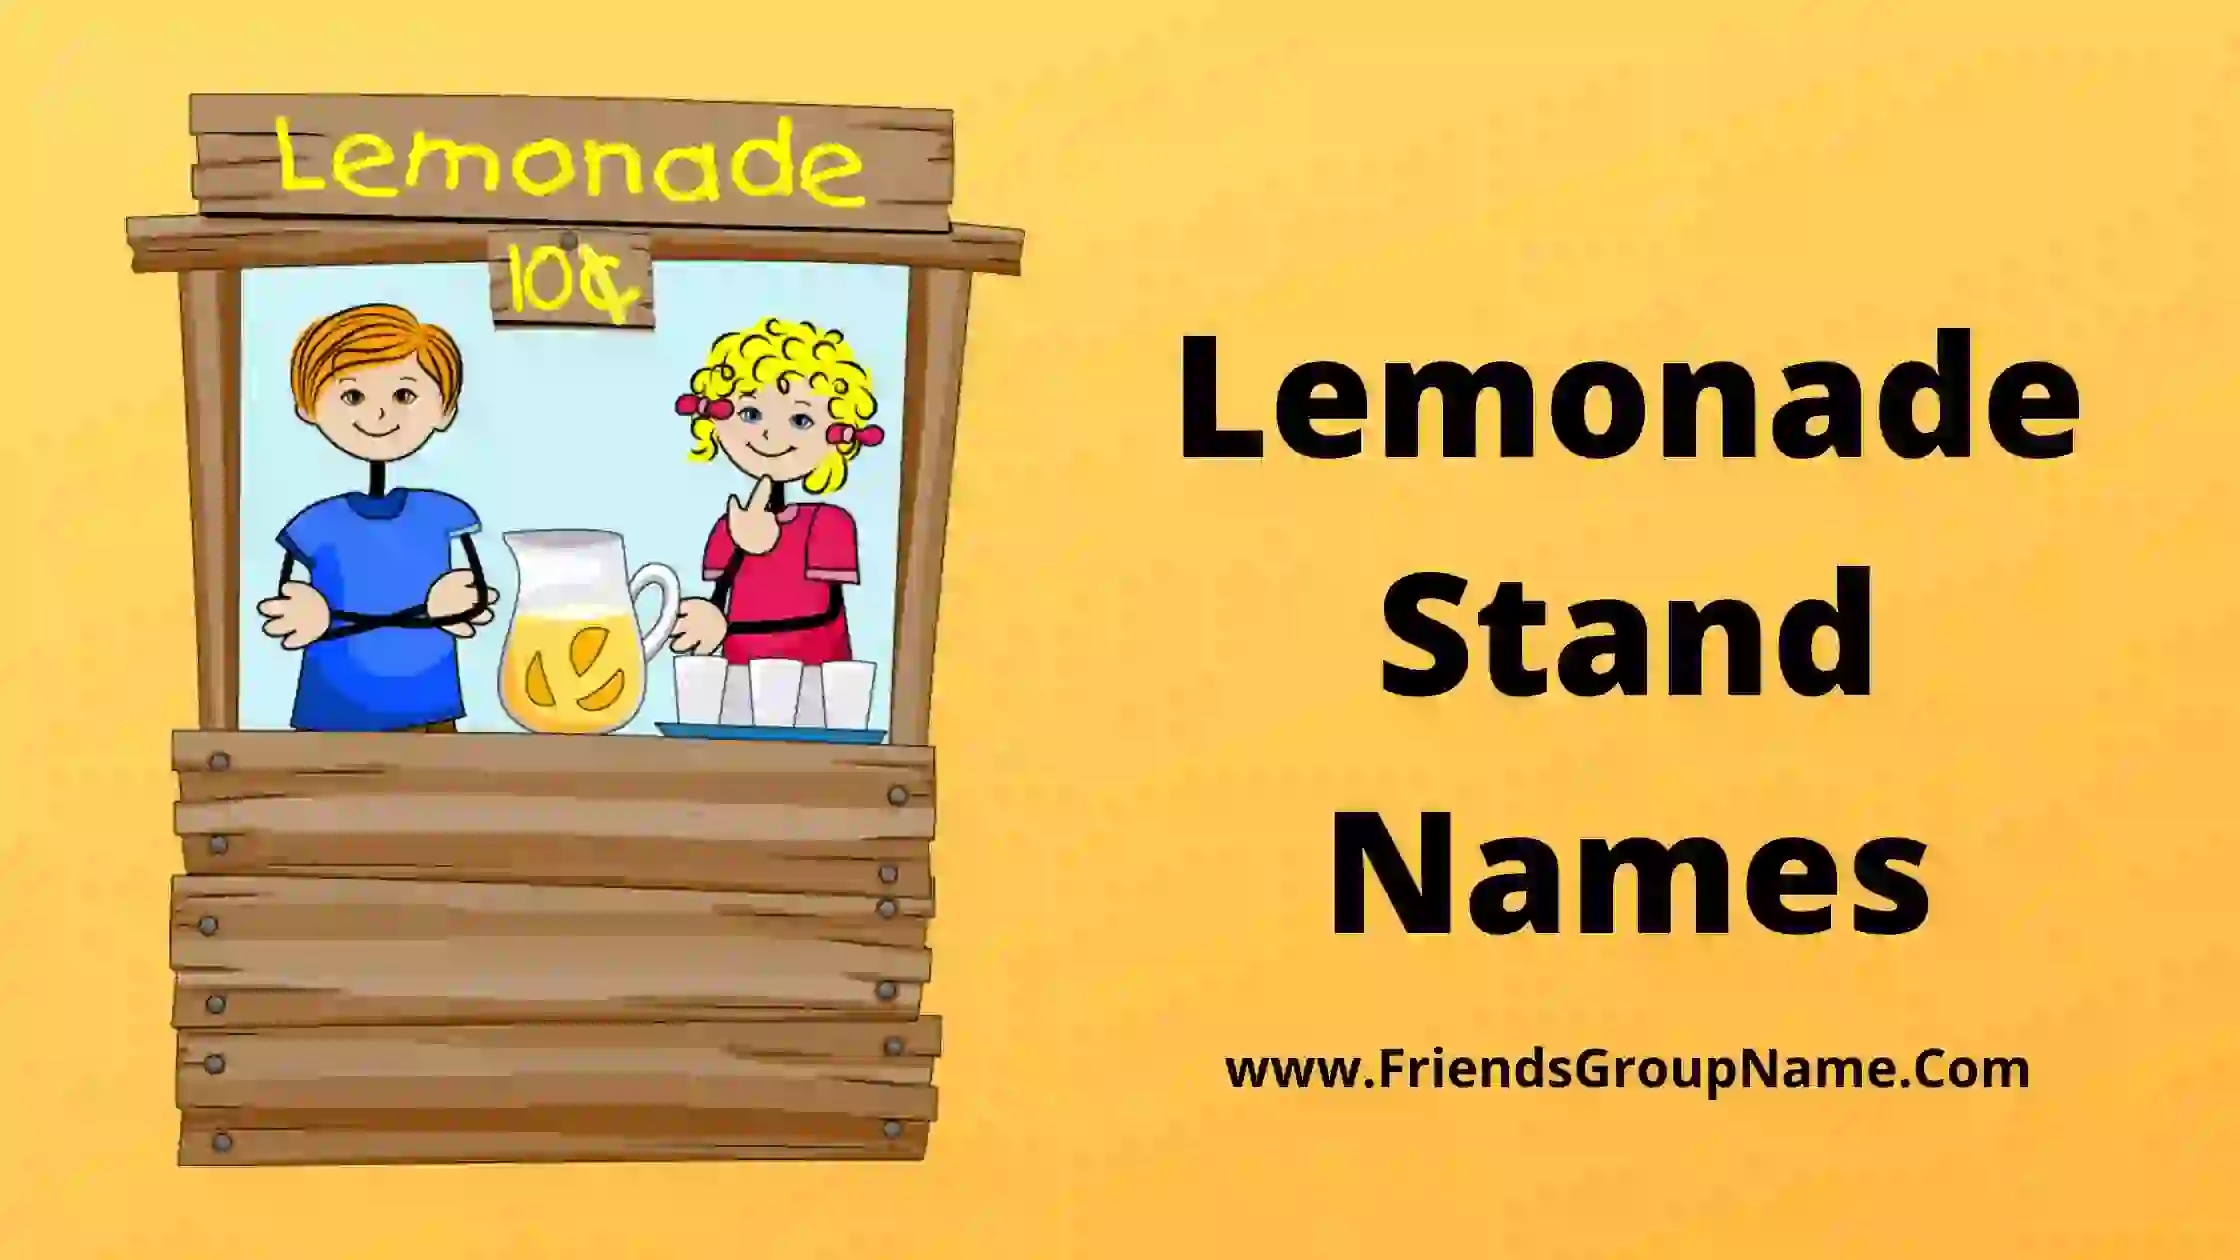 Lemonade Stand Names